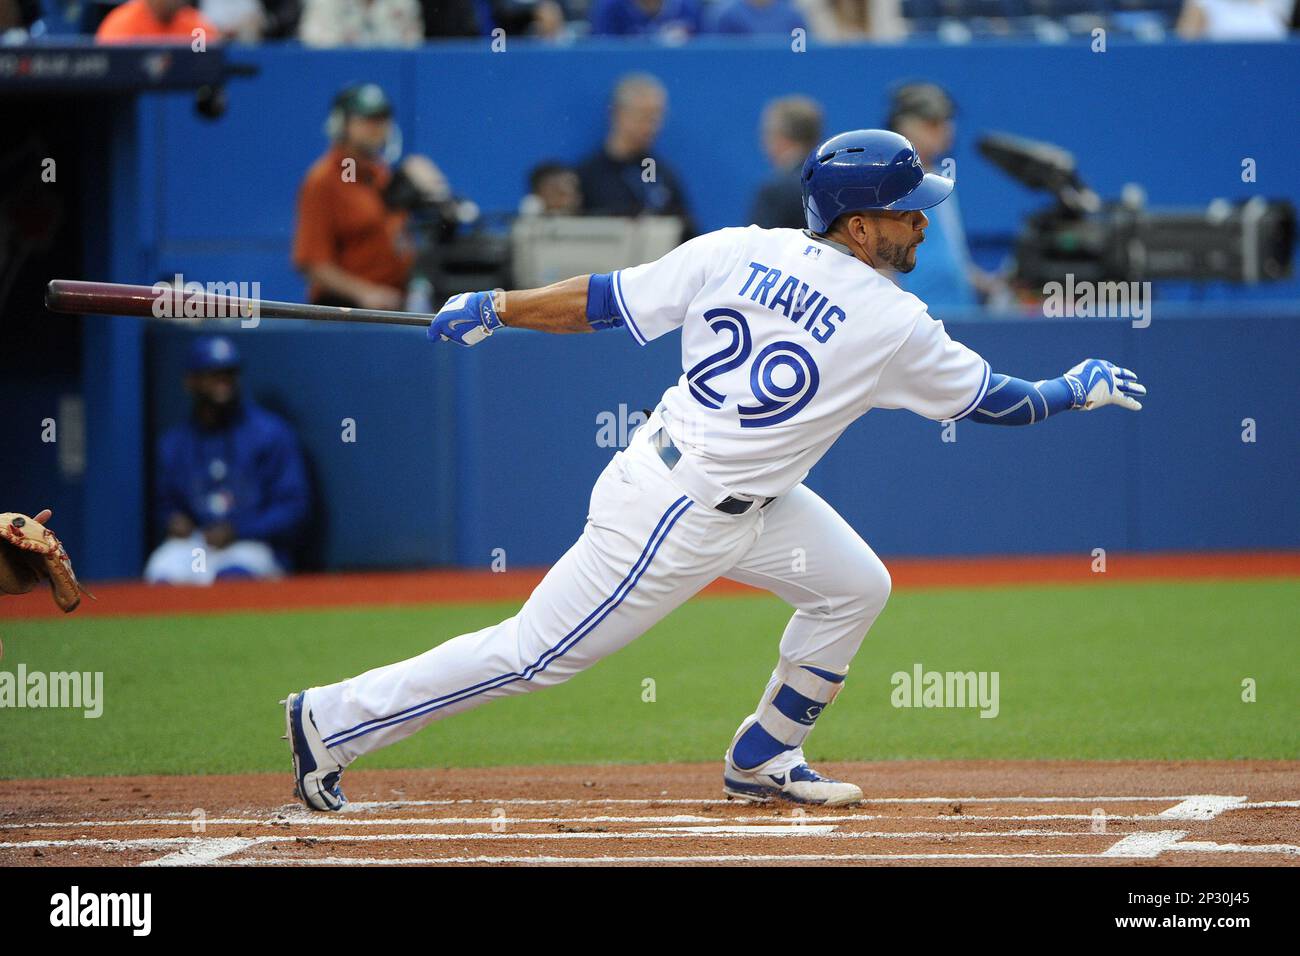 17 March 2015: Toronto Blue Jays second baseman Devon Travis (77